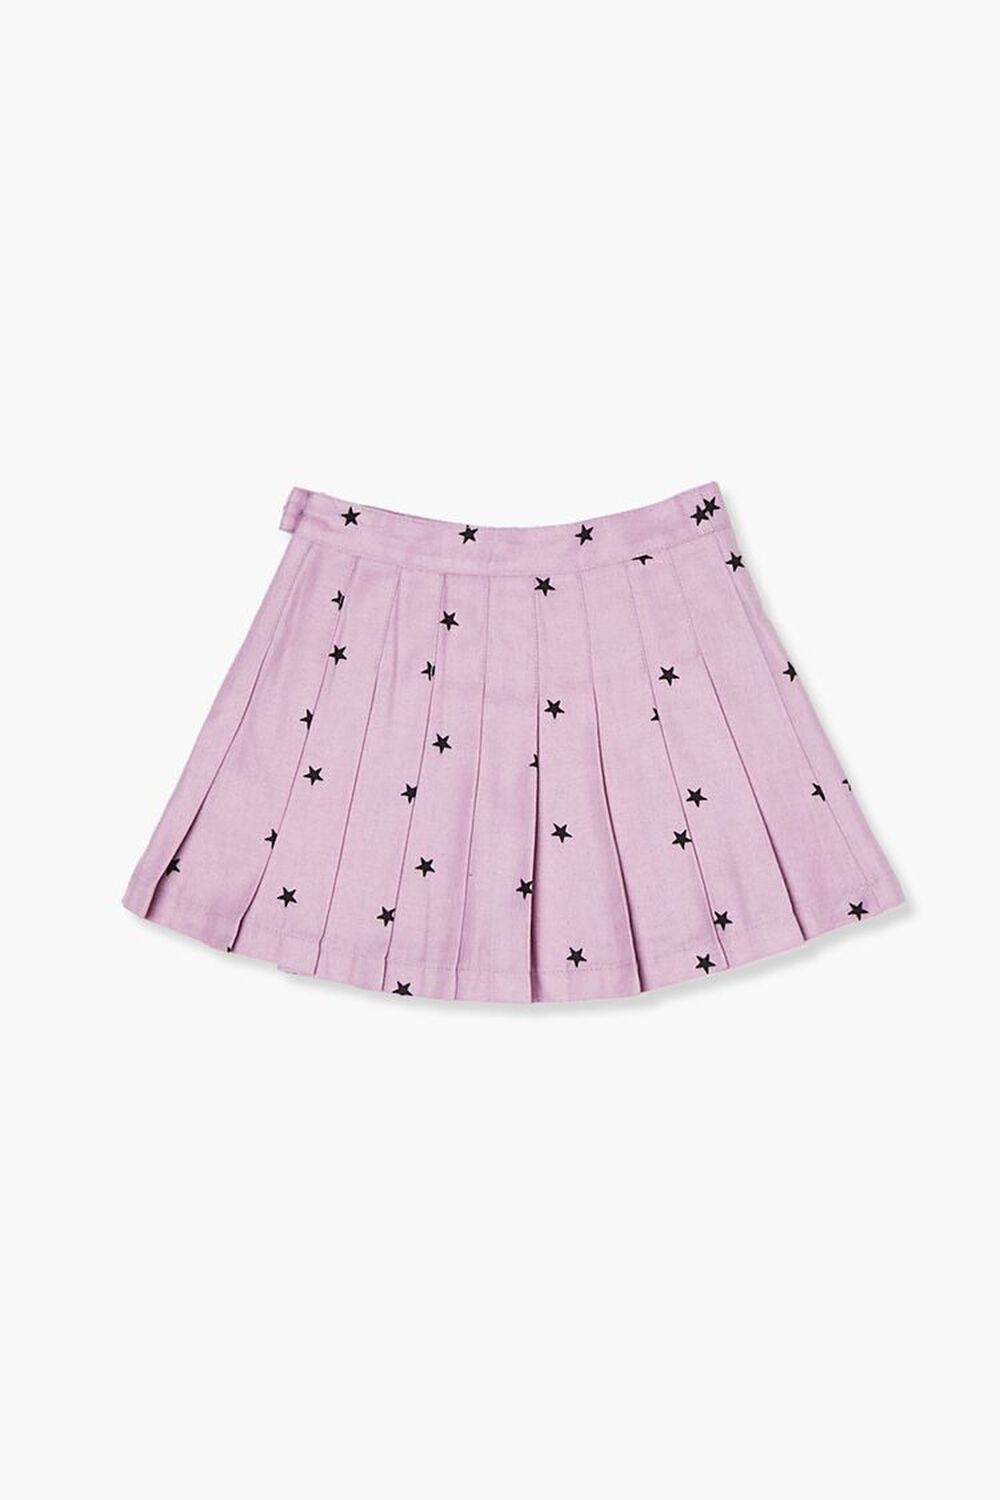 PURPLE/BLACK Girls Star Print Pleated Skirt (Kids), image 2